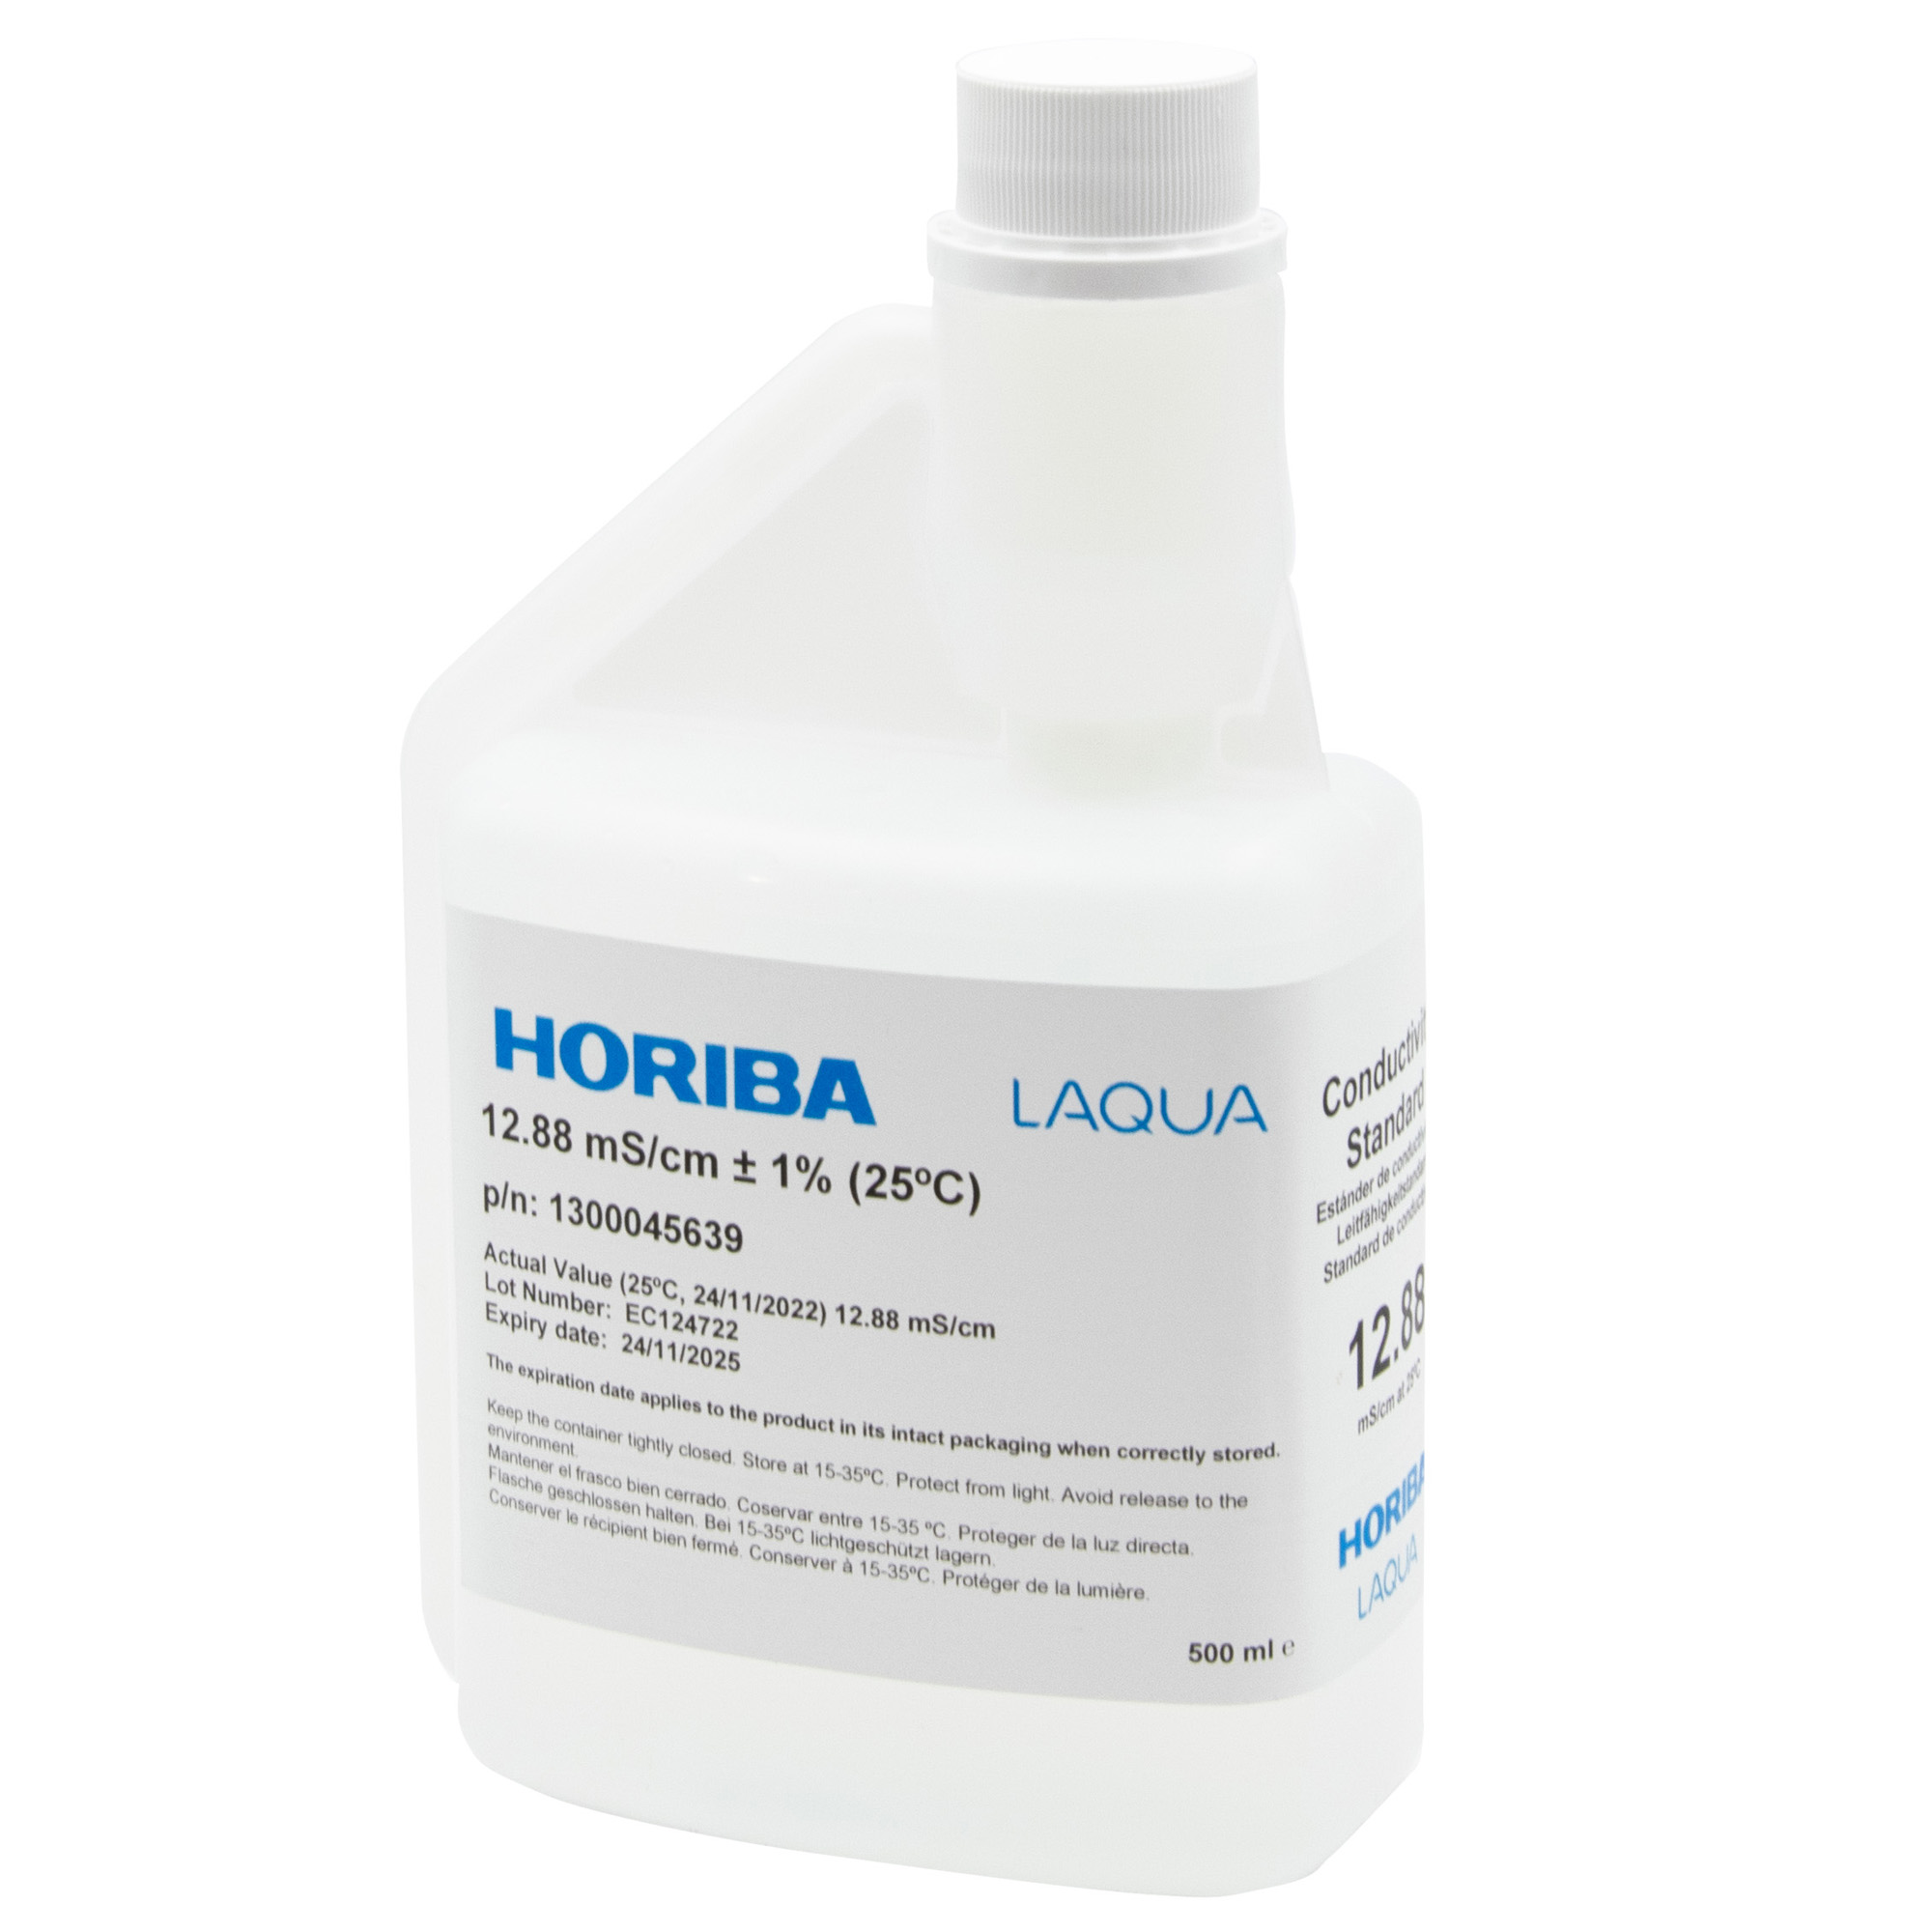 HORIBA 12.88 mS/cm conductivity calibration solution 500ml (500-EC-1288)